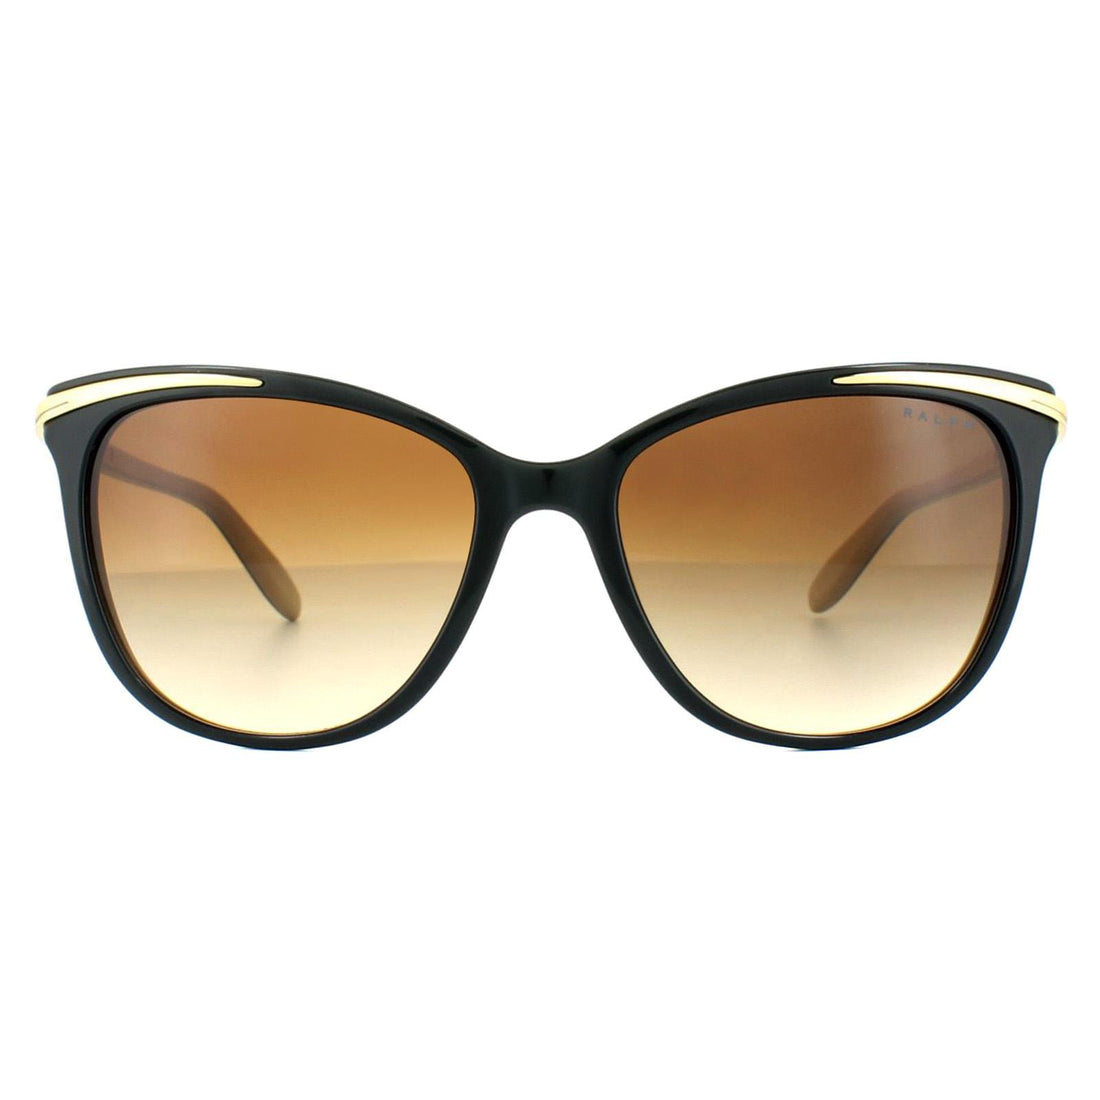 Ralph by Ralph Lauren Sunglasses 5203 109013 Black Brown Gradient